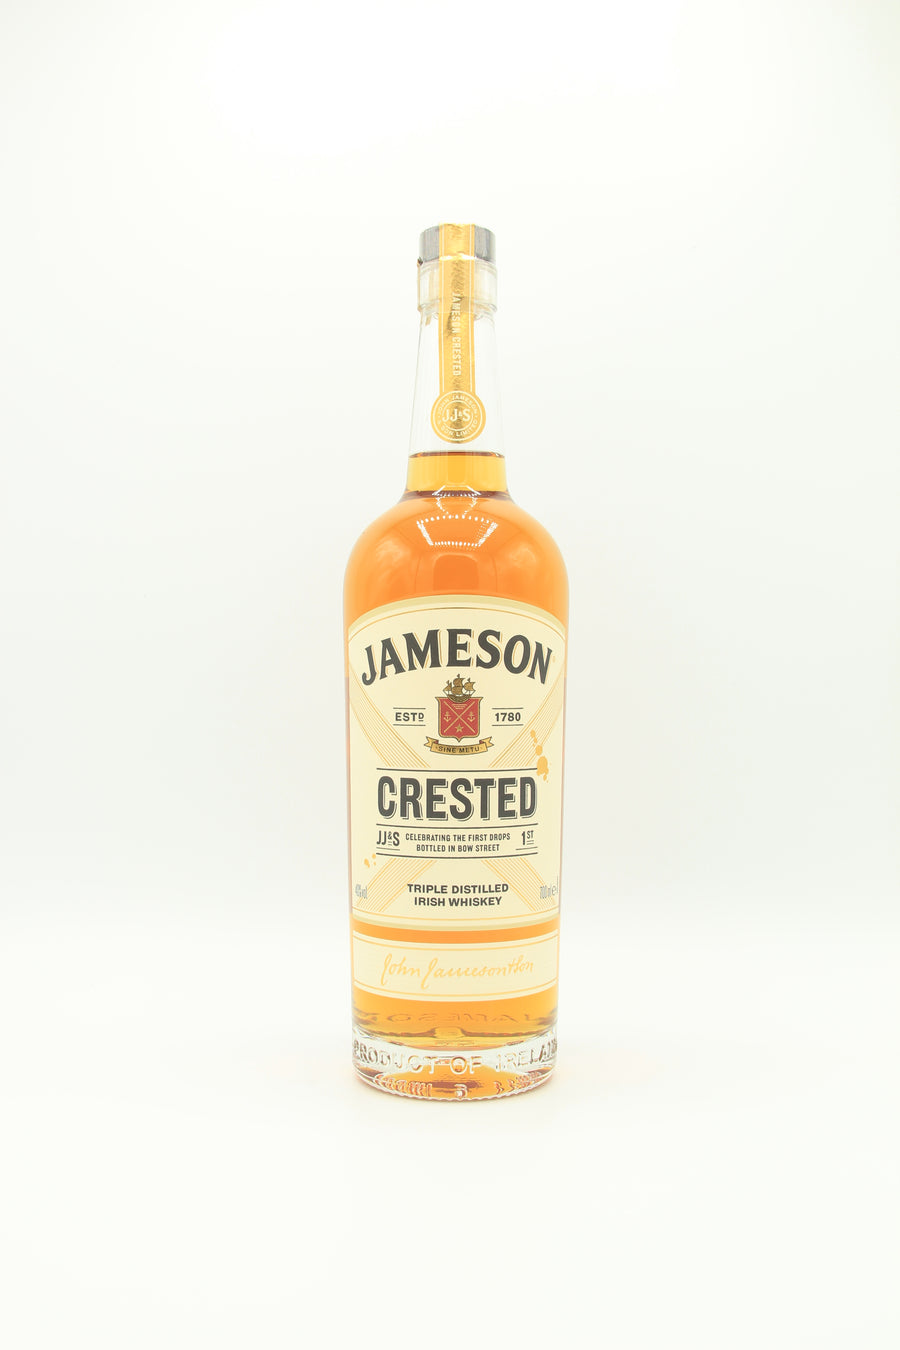 Jameson Crested Blended Whiskey, Ireland